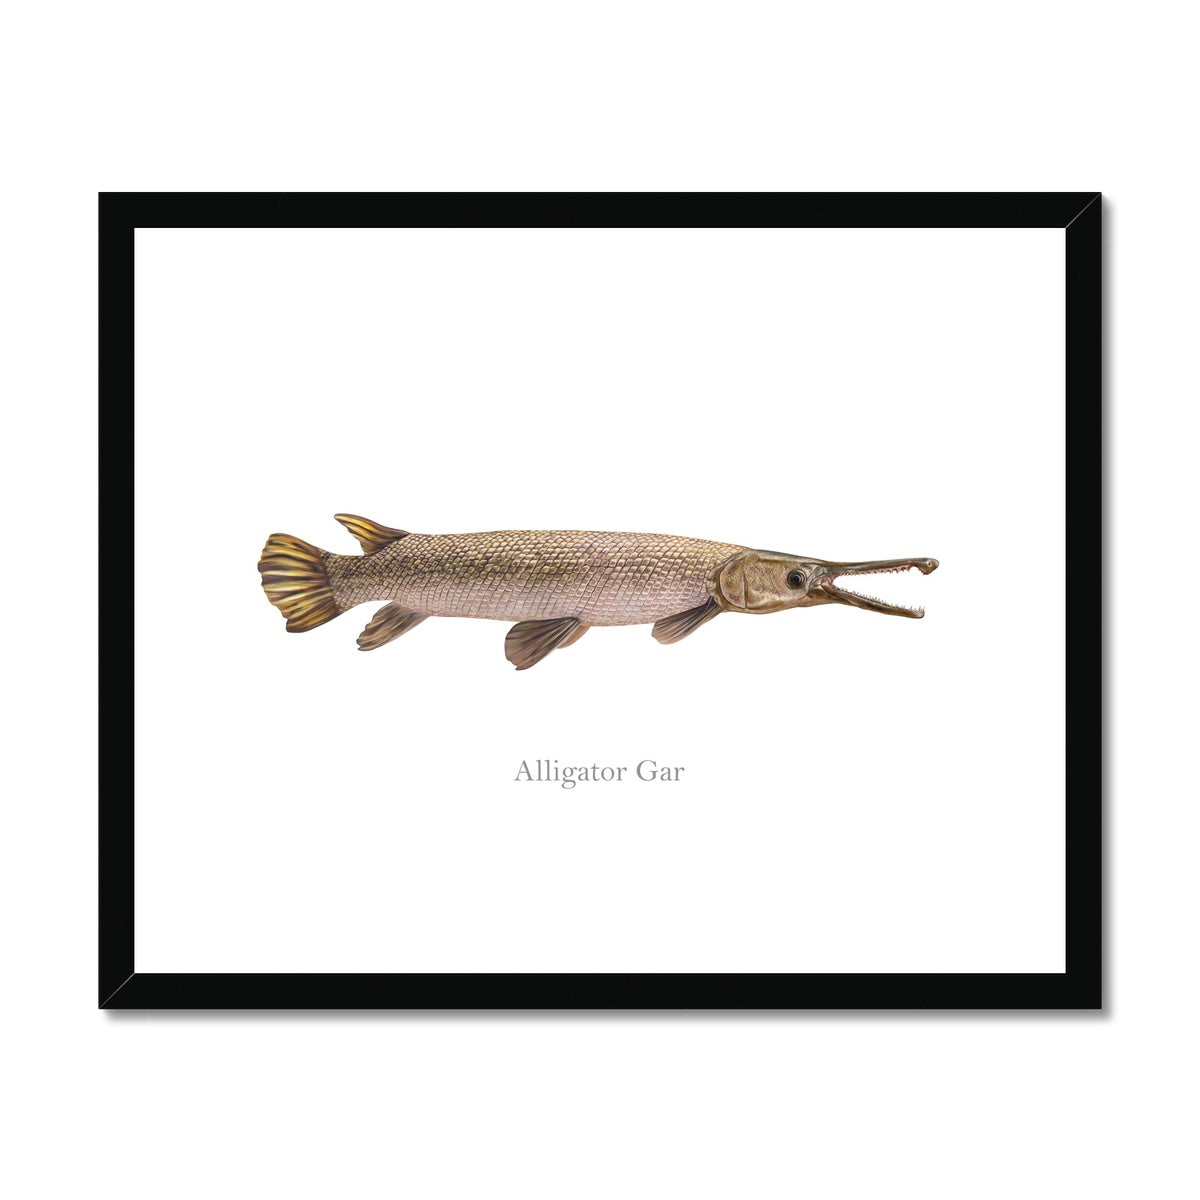 Alligator Gar - Framed & Mounted Print